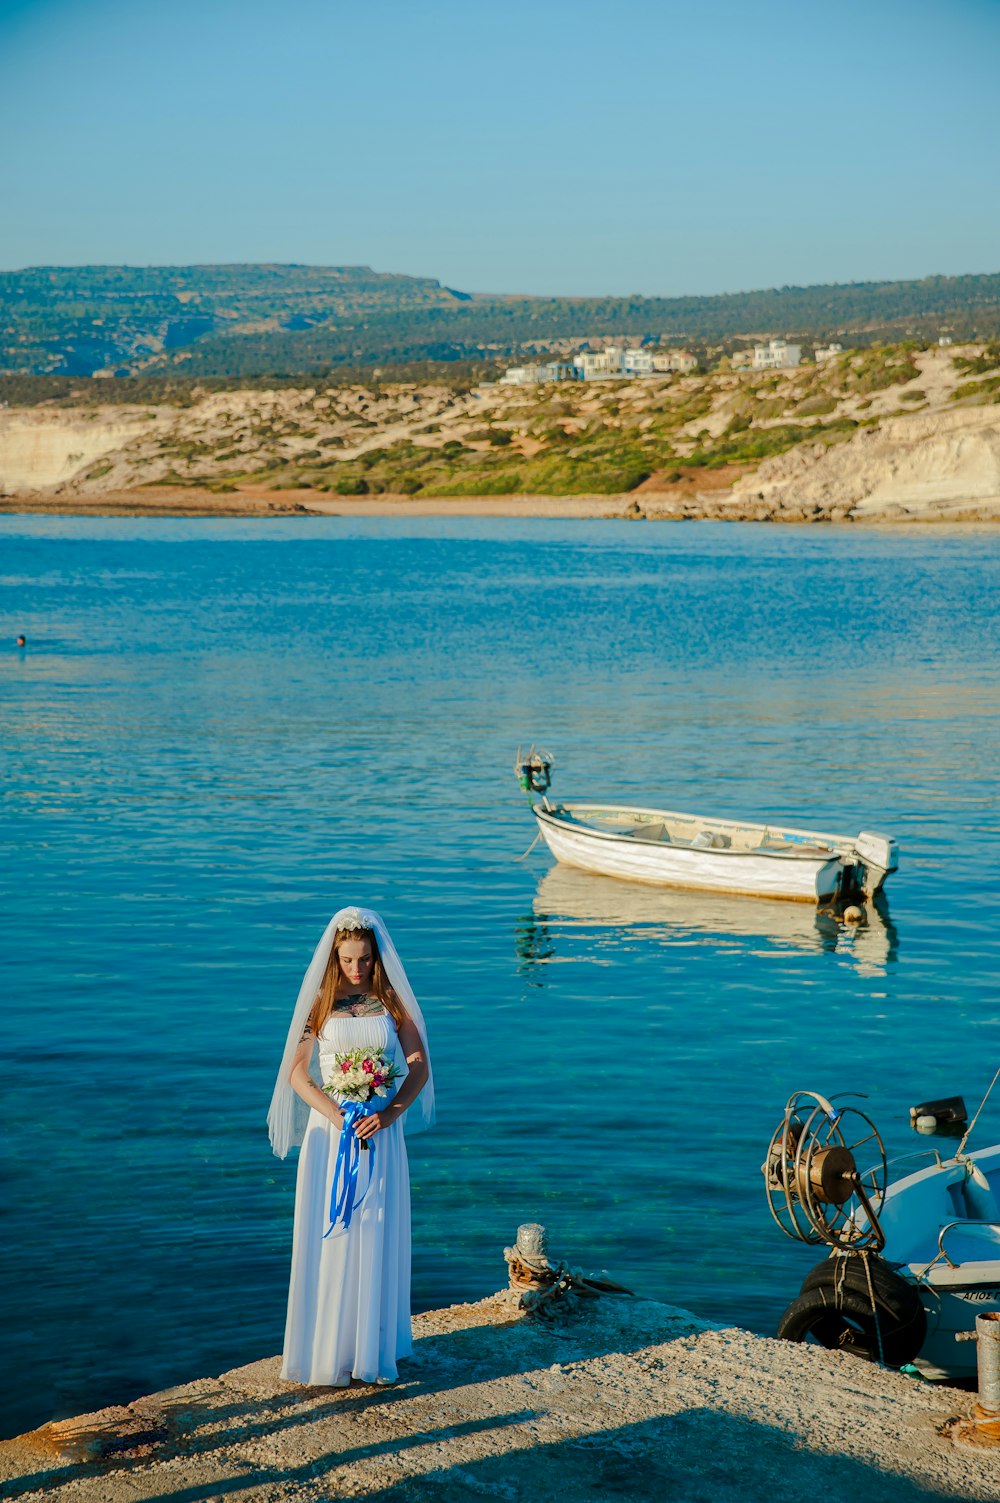 woman wearing white wedding dress standing near body of water holding flower bouquet